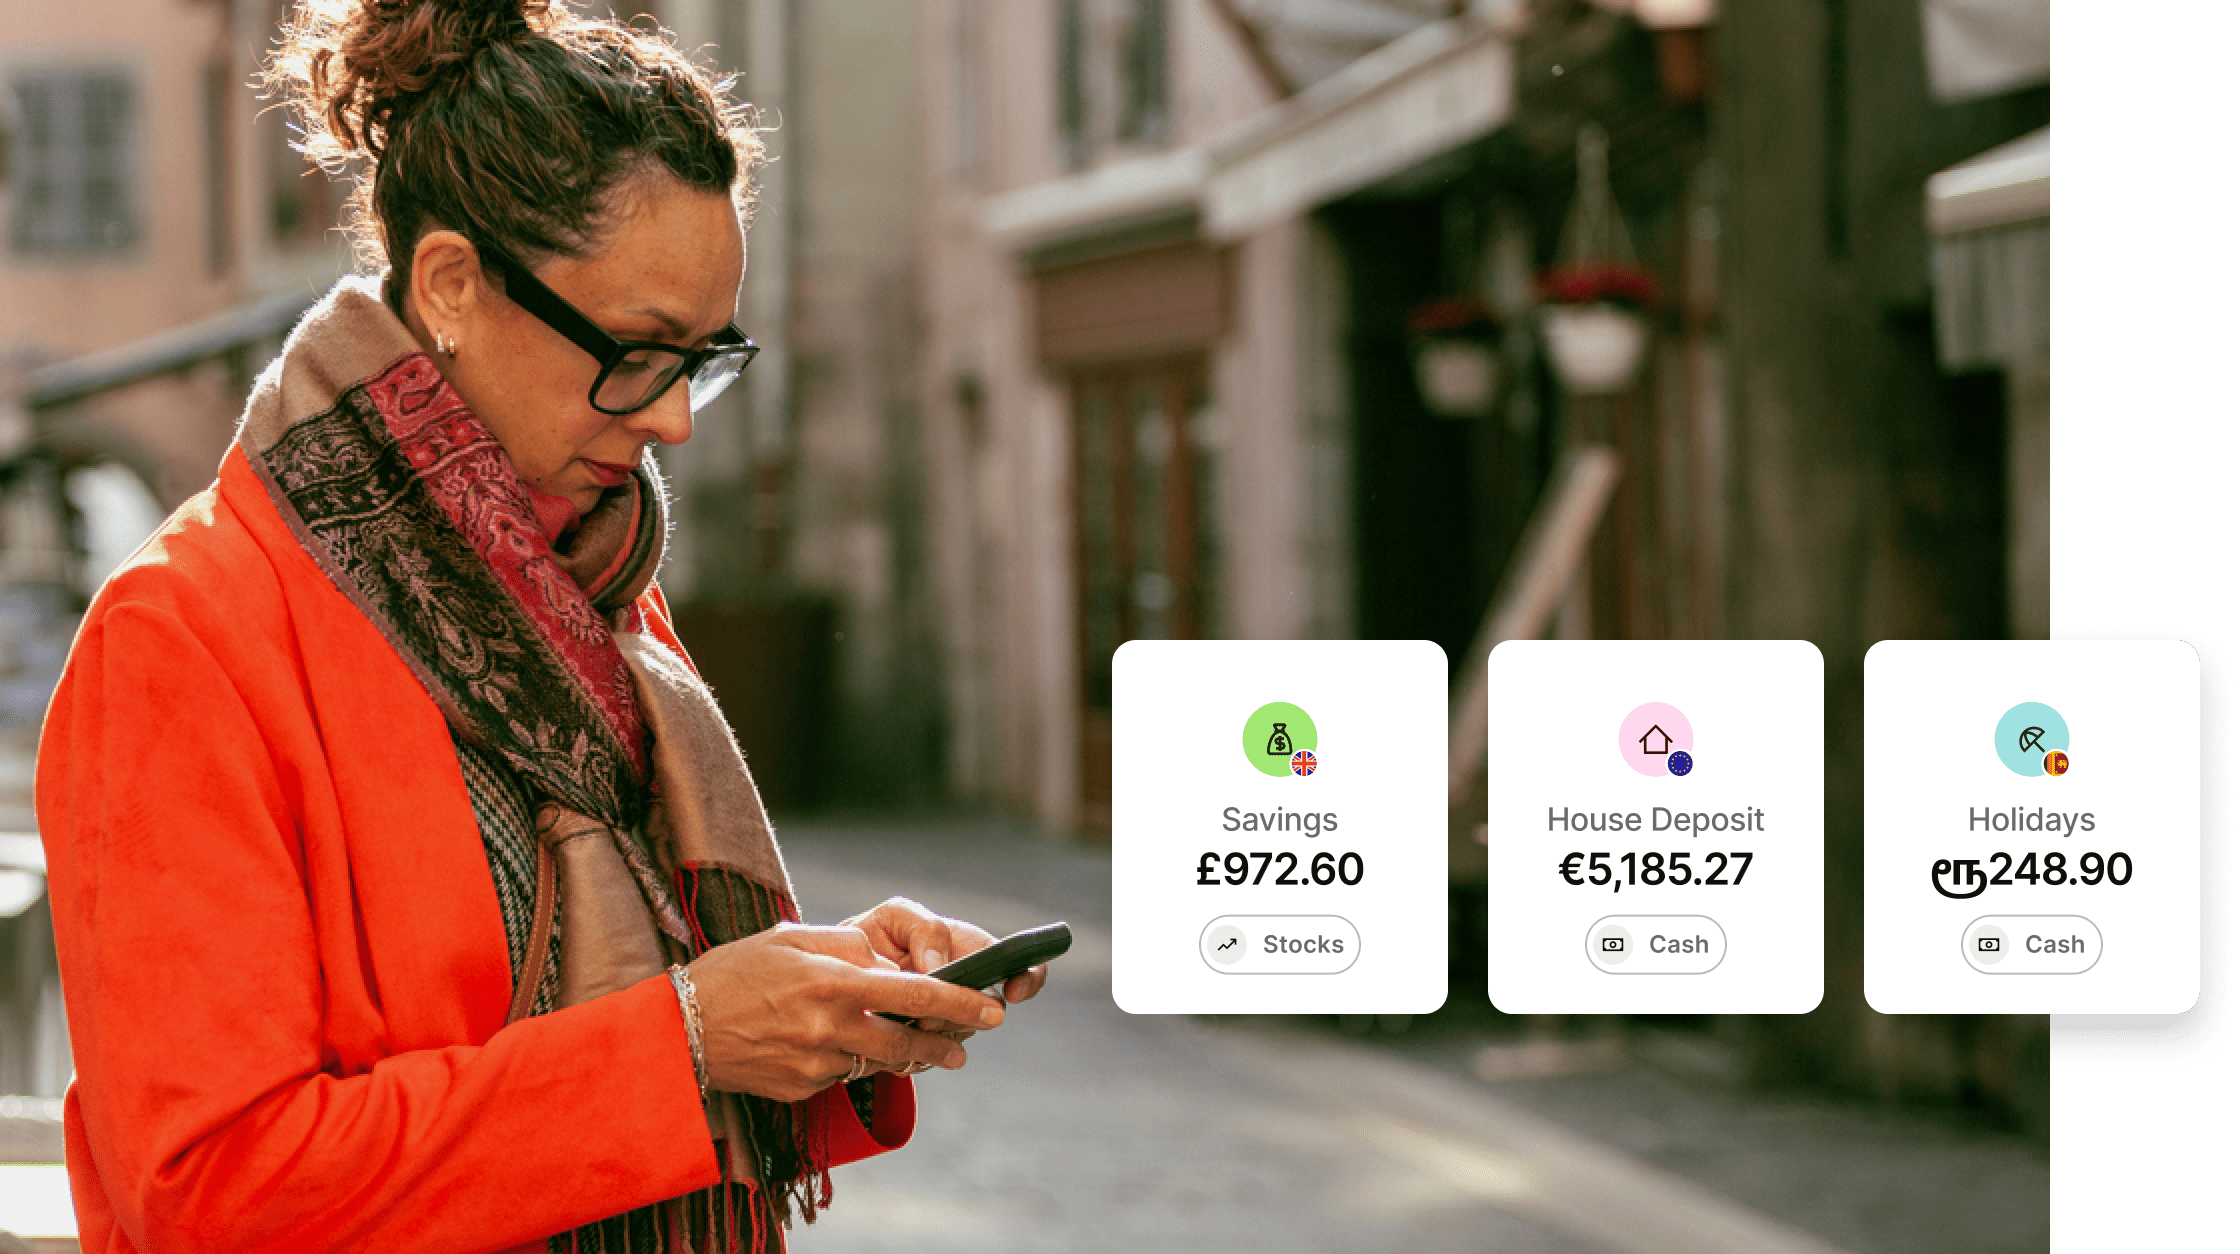 Wiseアプリはいろいろな通貨でお金を貯めるのに便利です